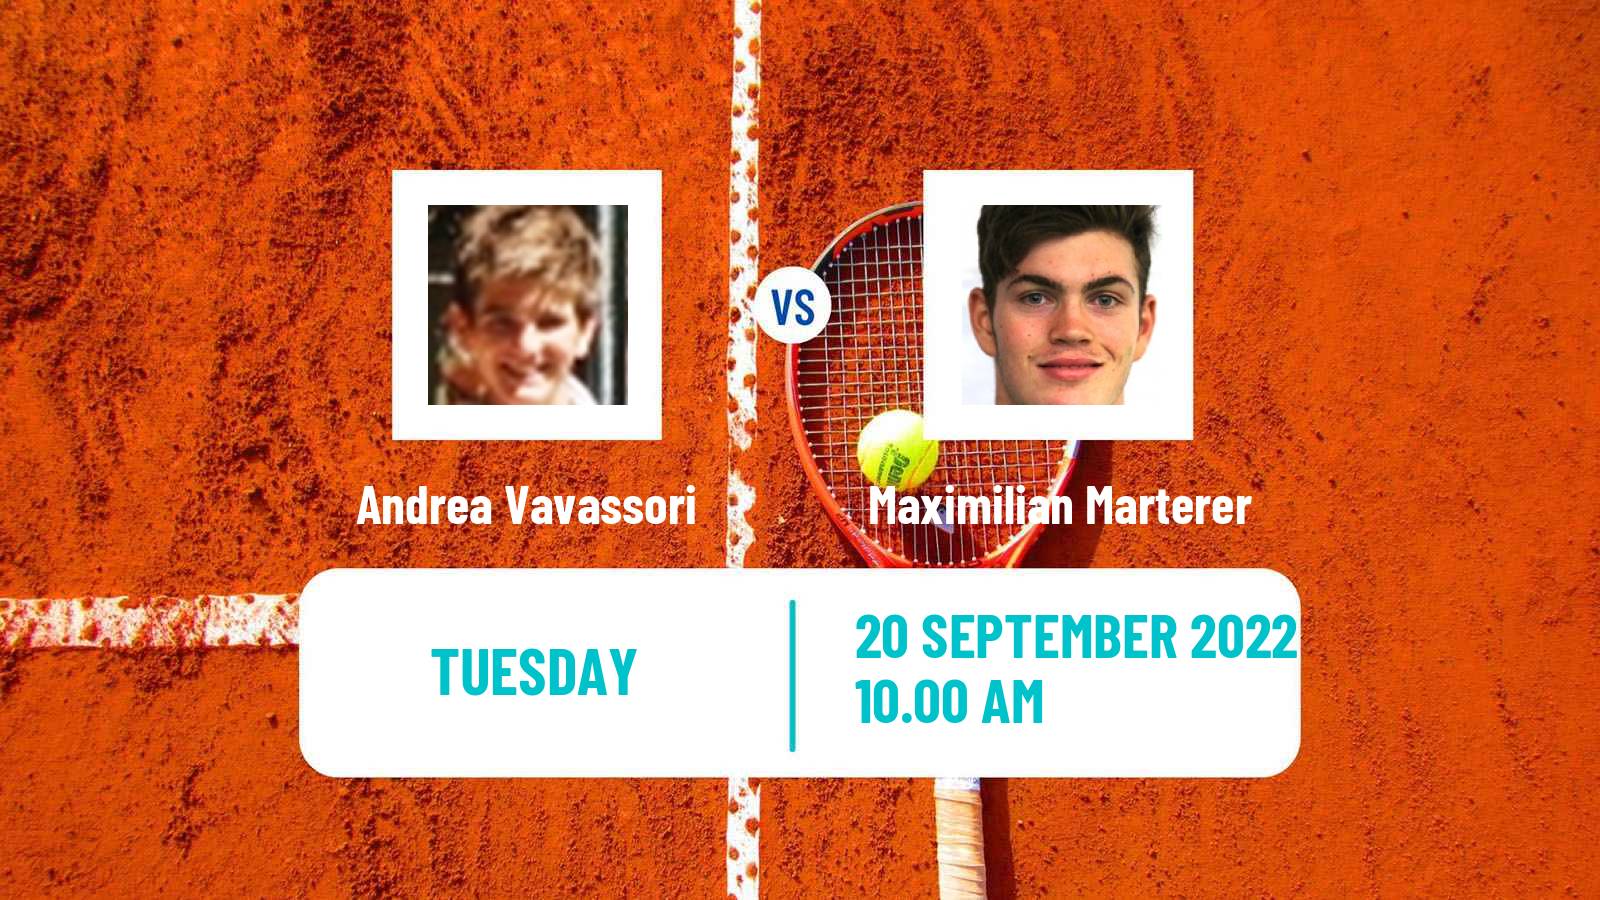 Tennis ATP Challenger Andrea Vavassori - Maximilian Marterer